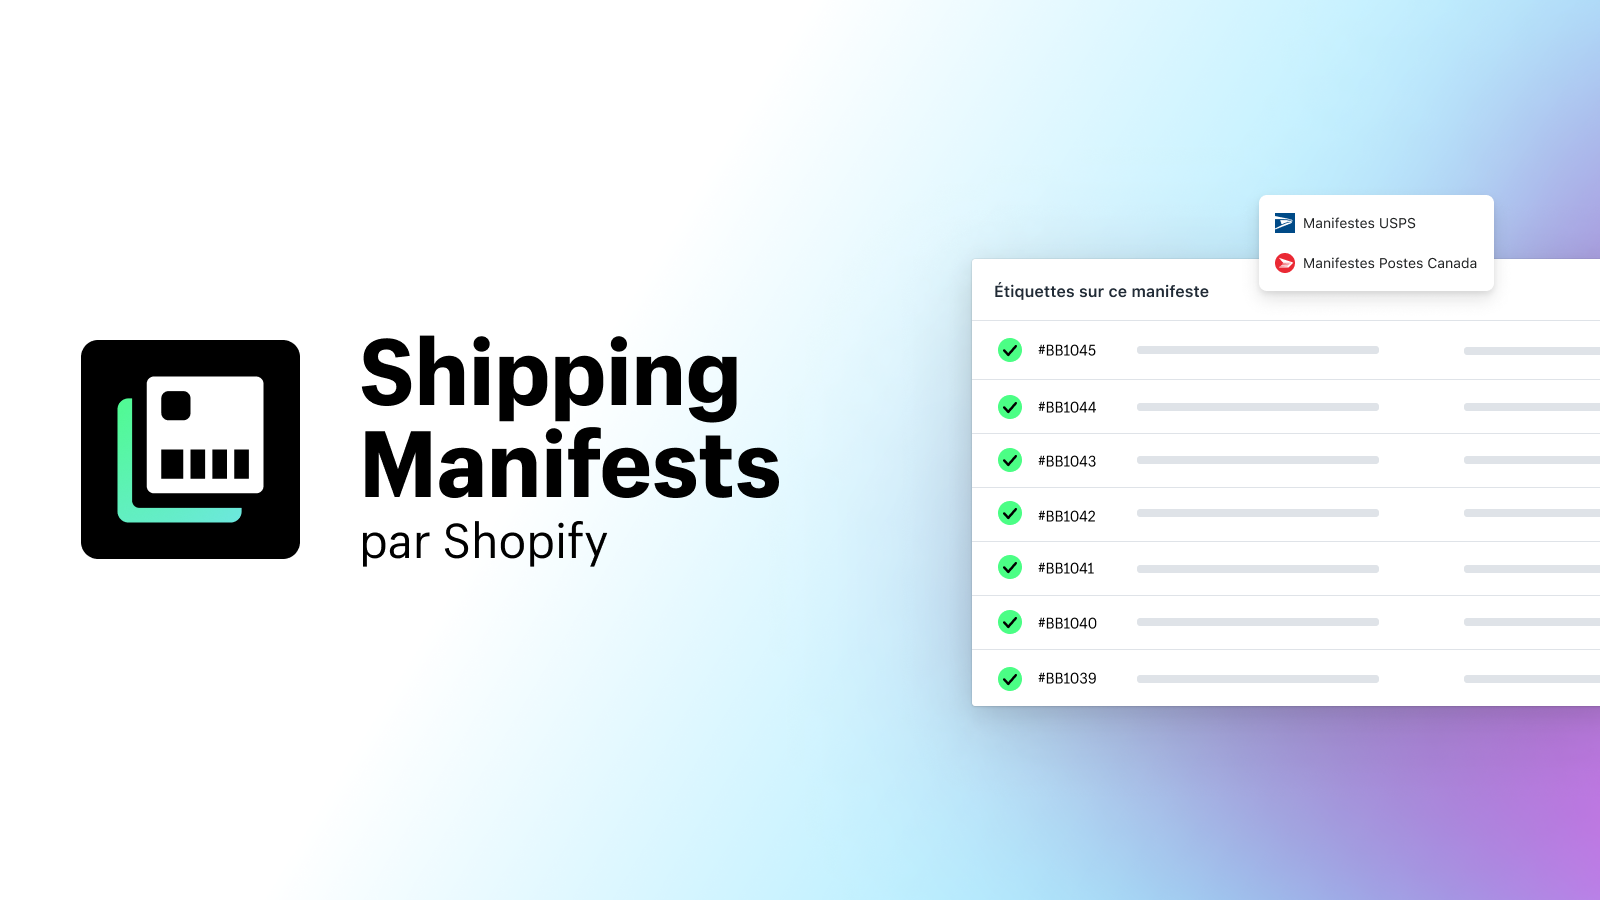 Shipping Manifests par Shopify